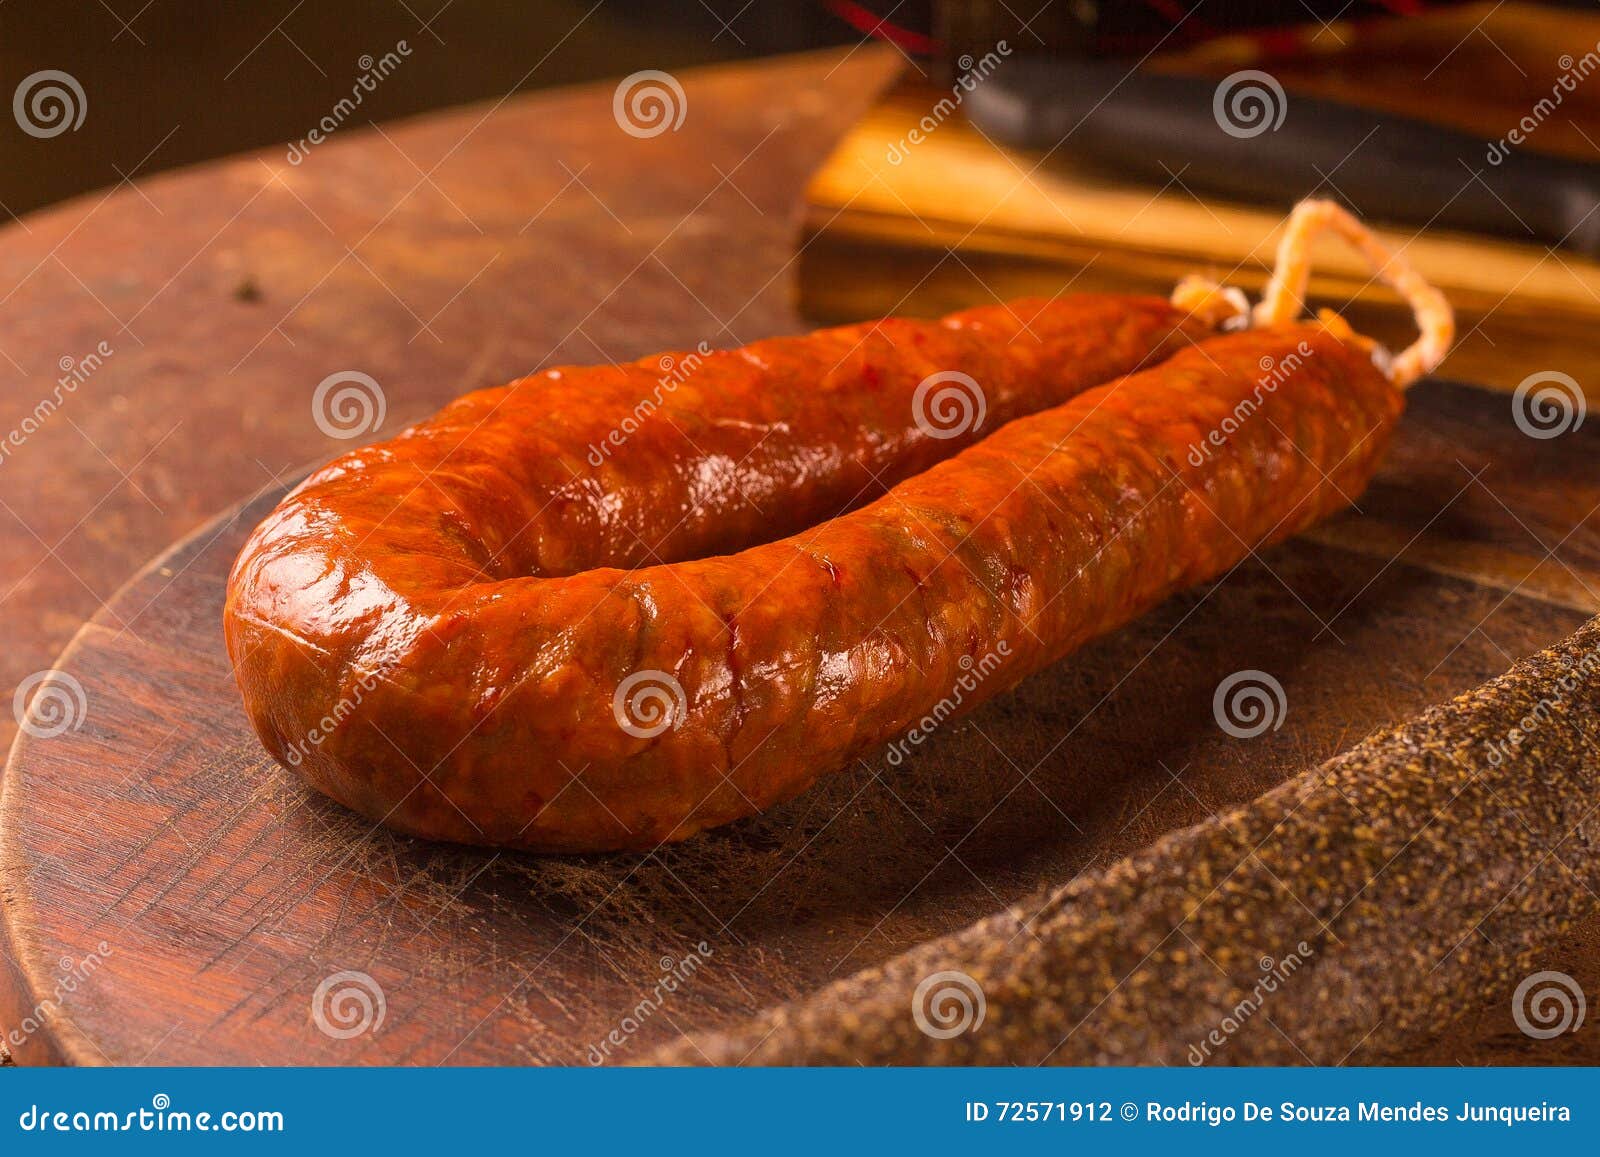 traditional chorizo sausage